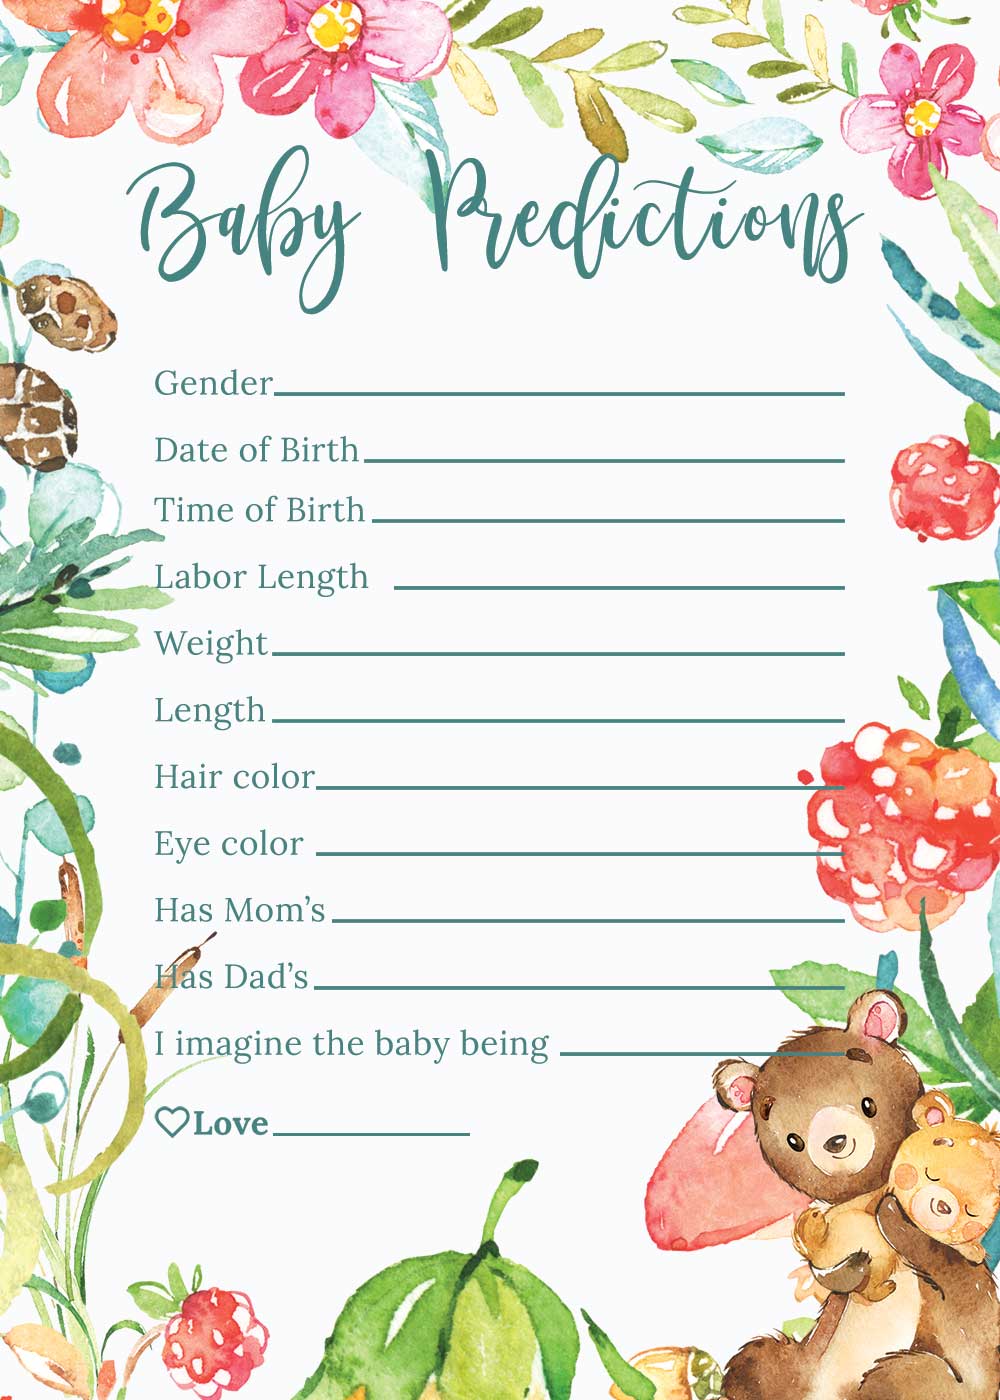 Baby Shower Baby prediction card - Raspberry Theme